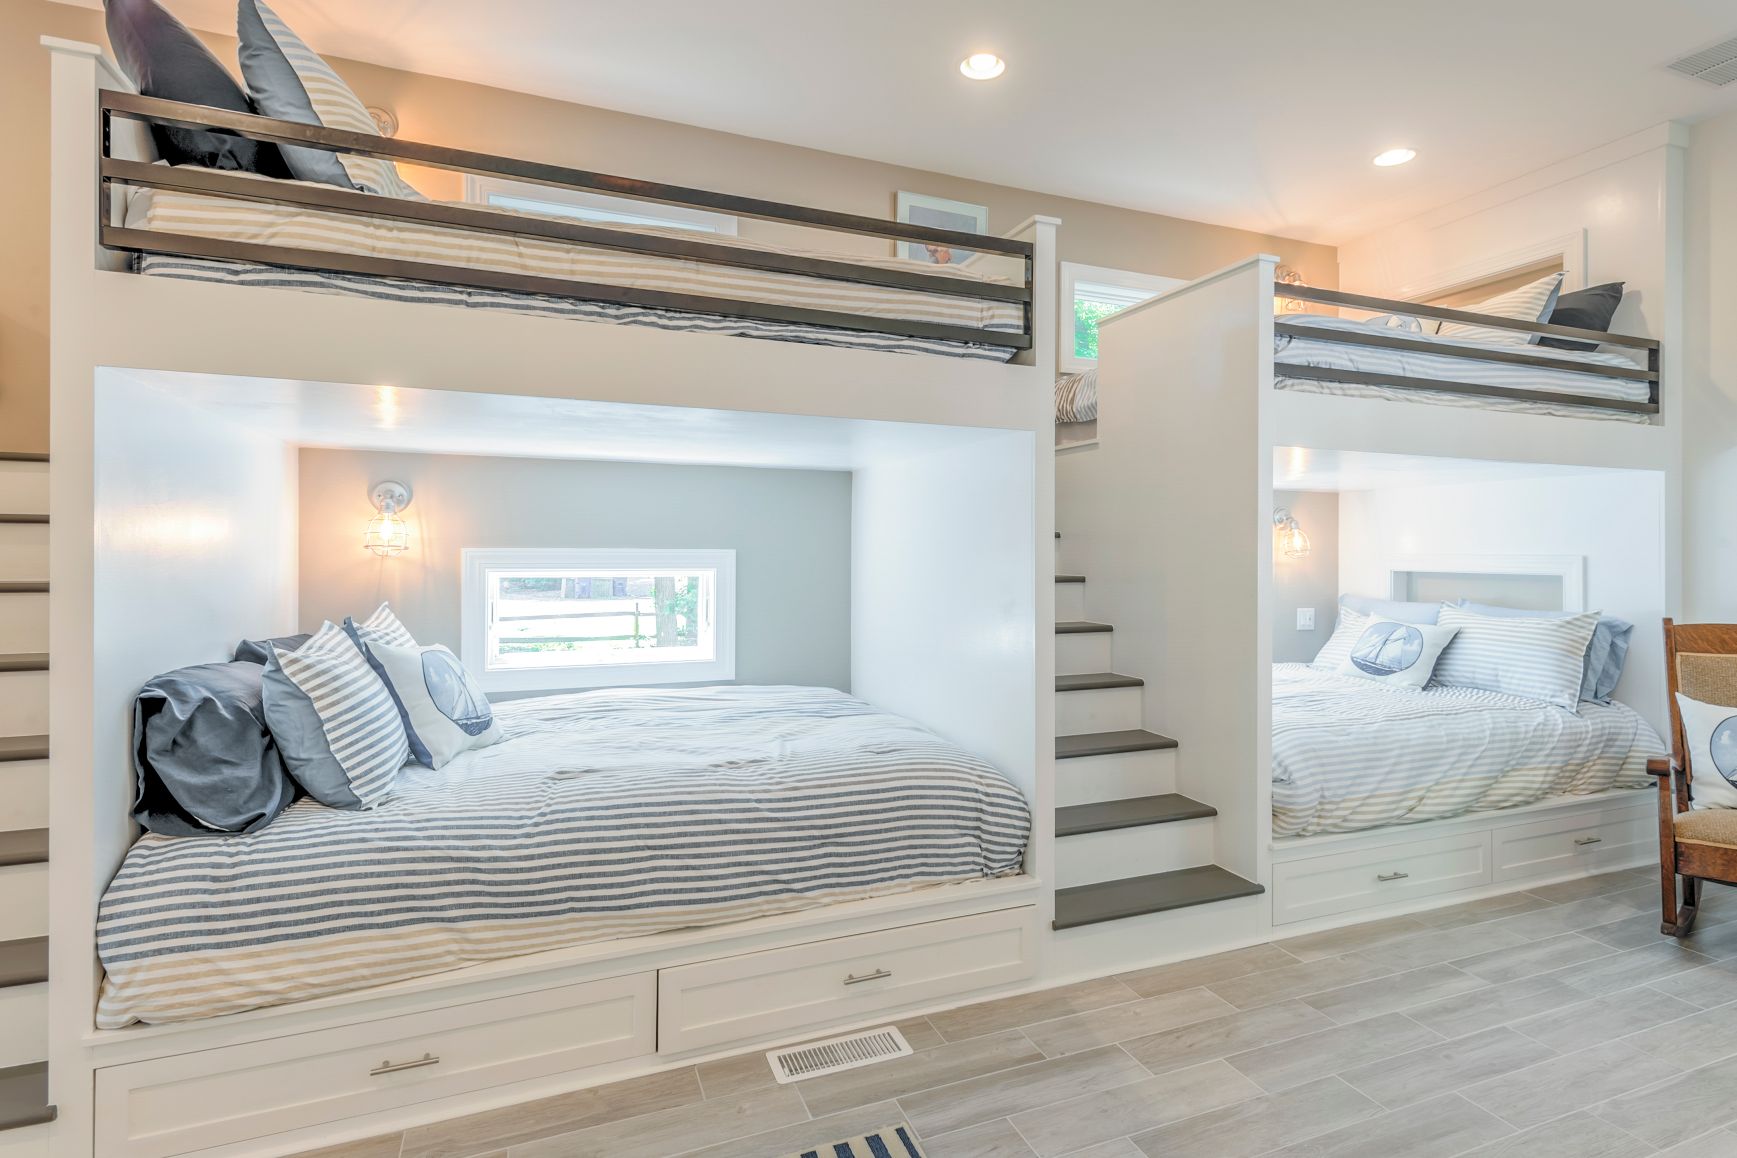 Addition in Juniper Court, Ocean Pines MD - Kids Bedroom Bunk Beds with Stairs in Between